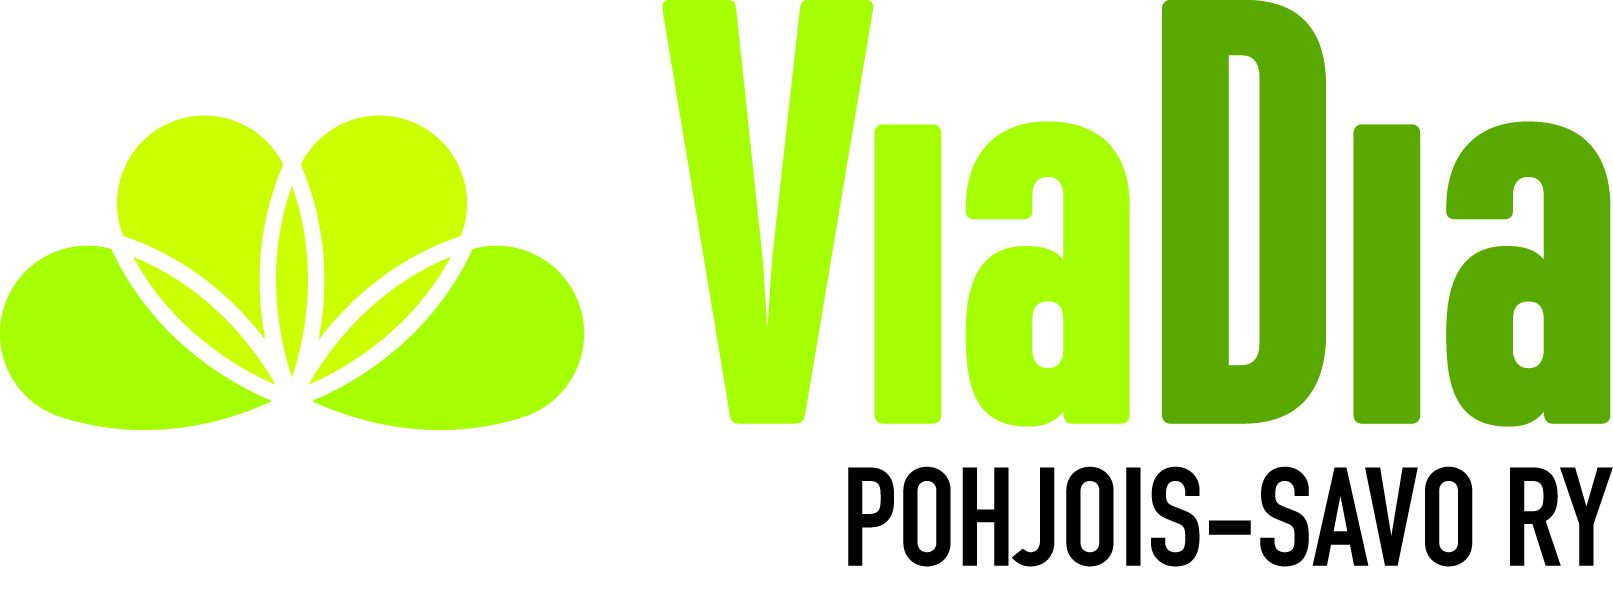 Jrjestn ViaDia Pohjois-Savo ry logo